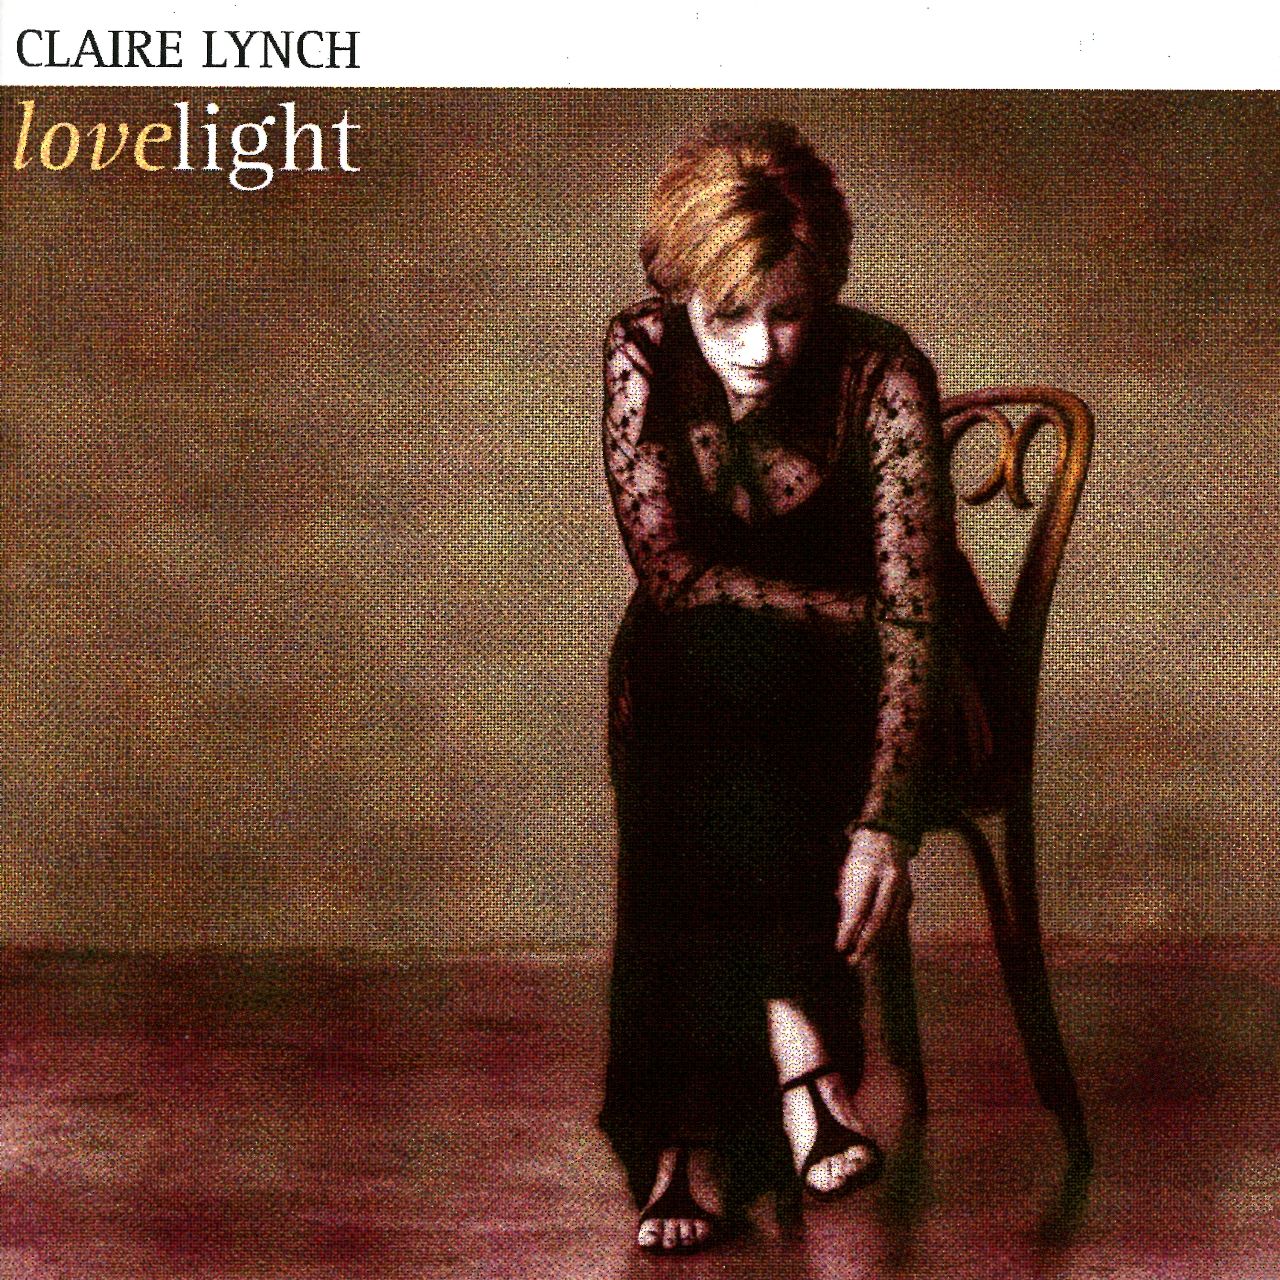 Claire Lynch - Love Light cover album